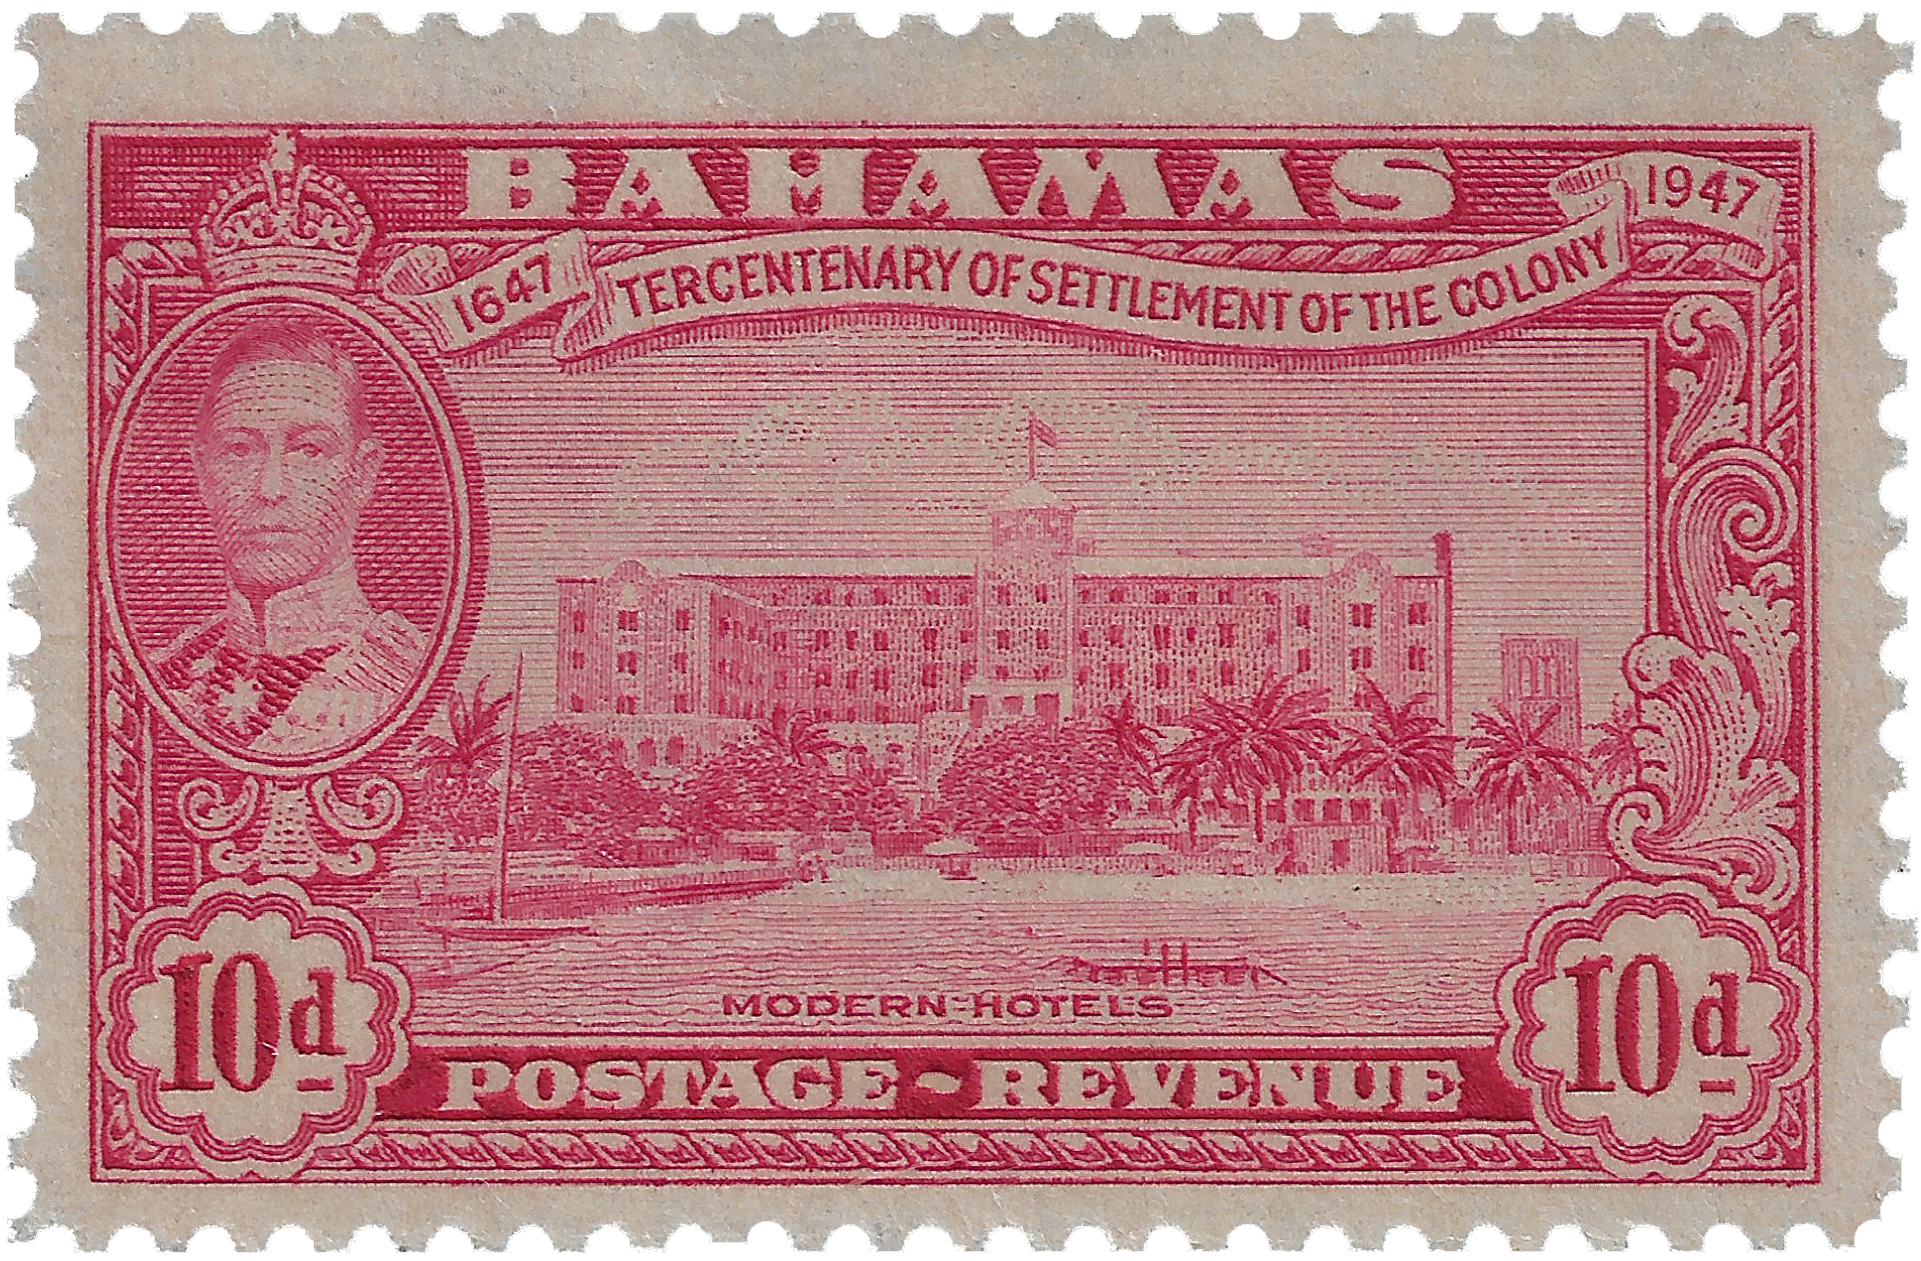 10d 1948, 1647 Tercentenary of Settlement of the Colony, Modern Hotels